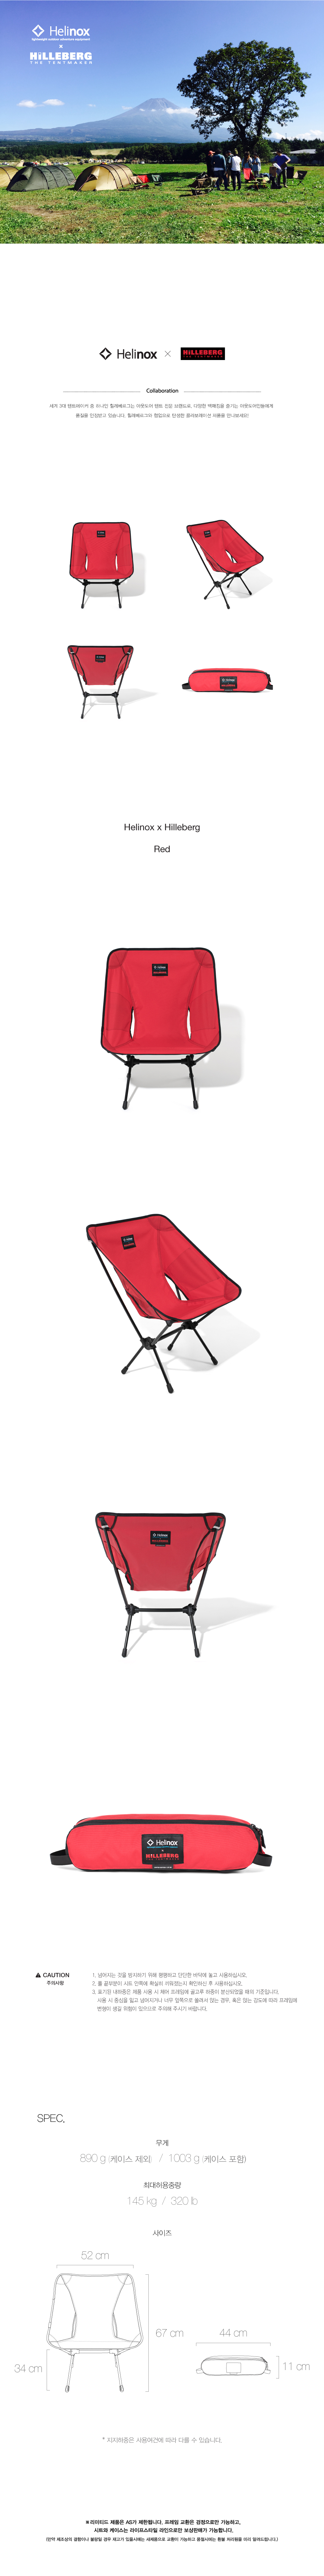 20161031-Hilleberg-chair---red.jpg